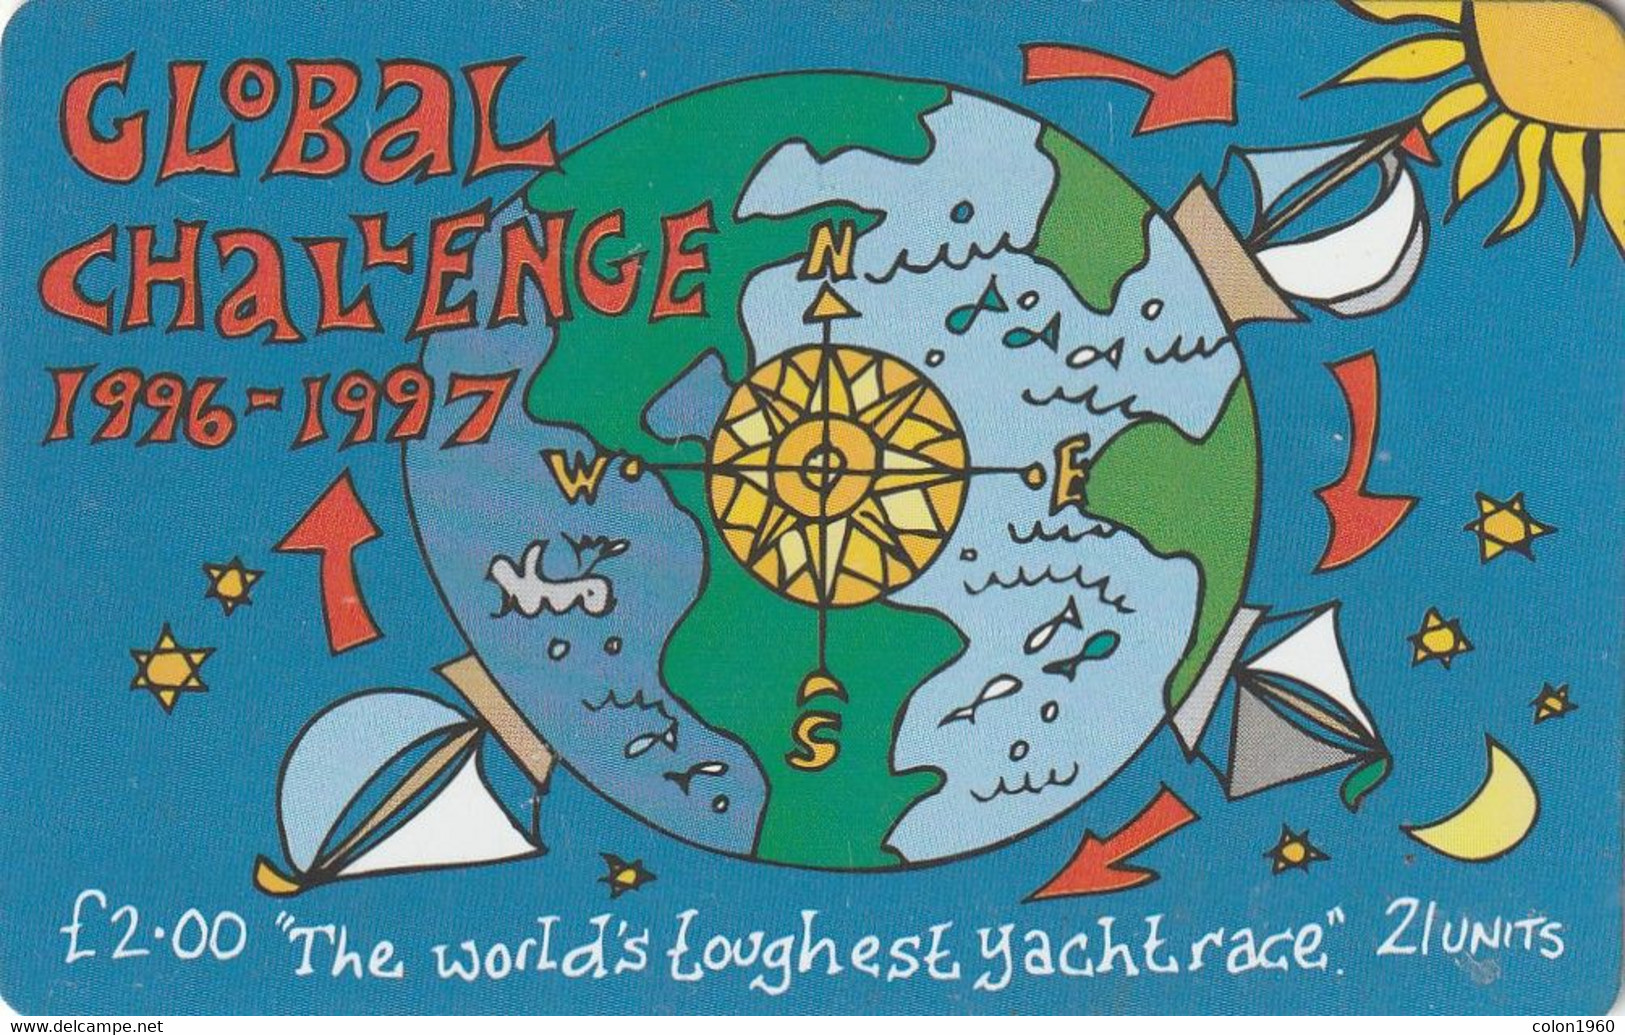 ISLE OF MAN. Global Challenge Yacht Race. 1996-01. 5000 Ex. IM-TEL-0111. (024). - [ 6] Isle Of Man